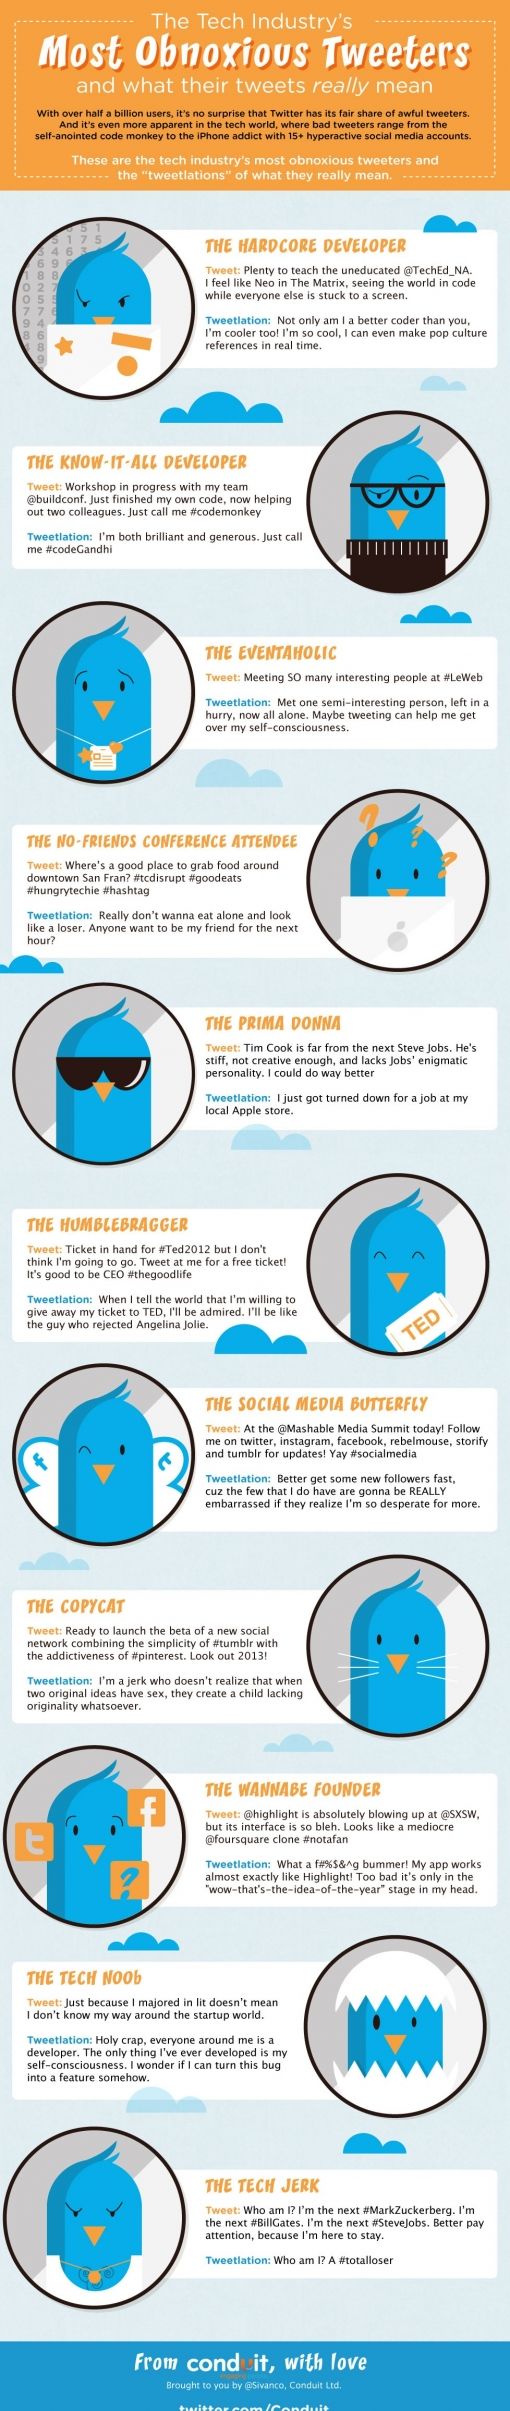 obnoxious-tweeters-infographic